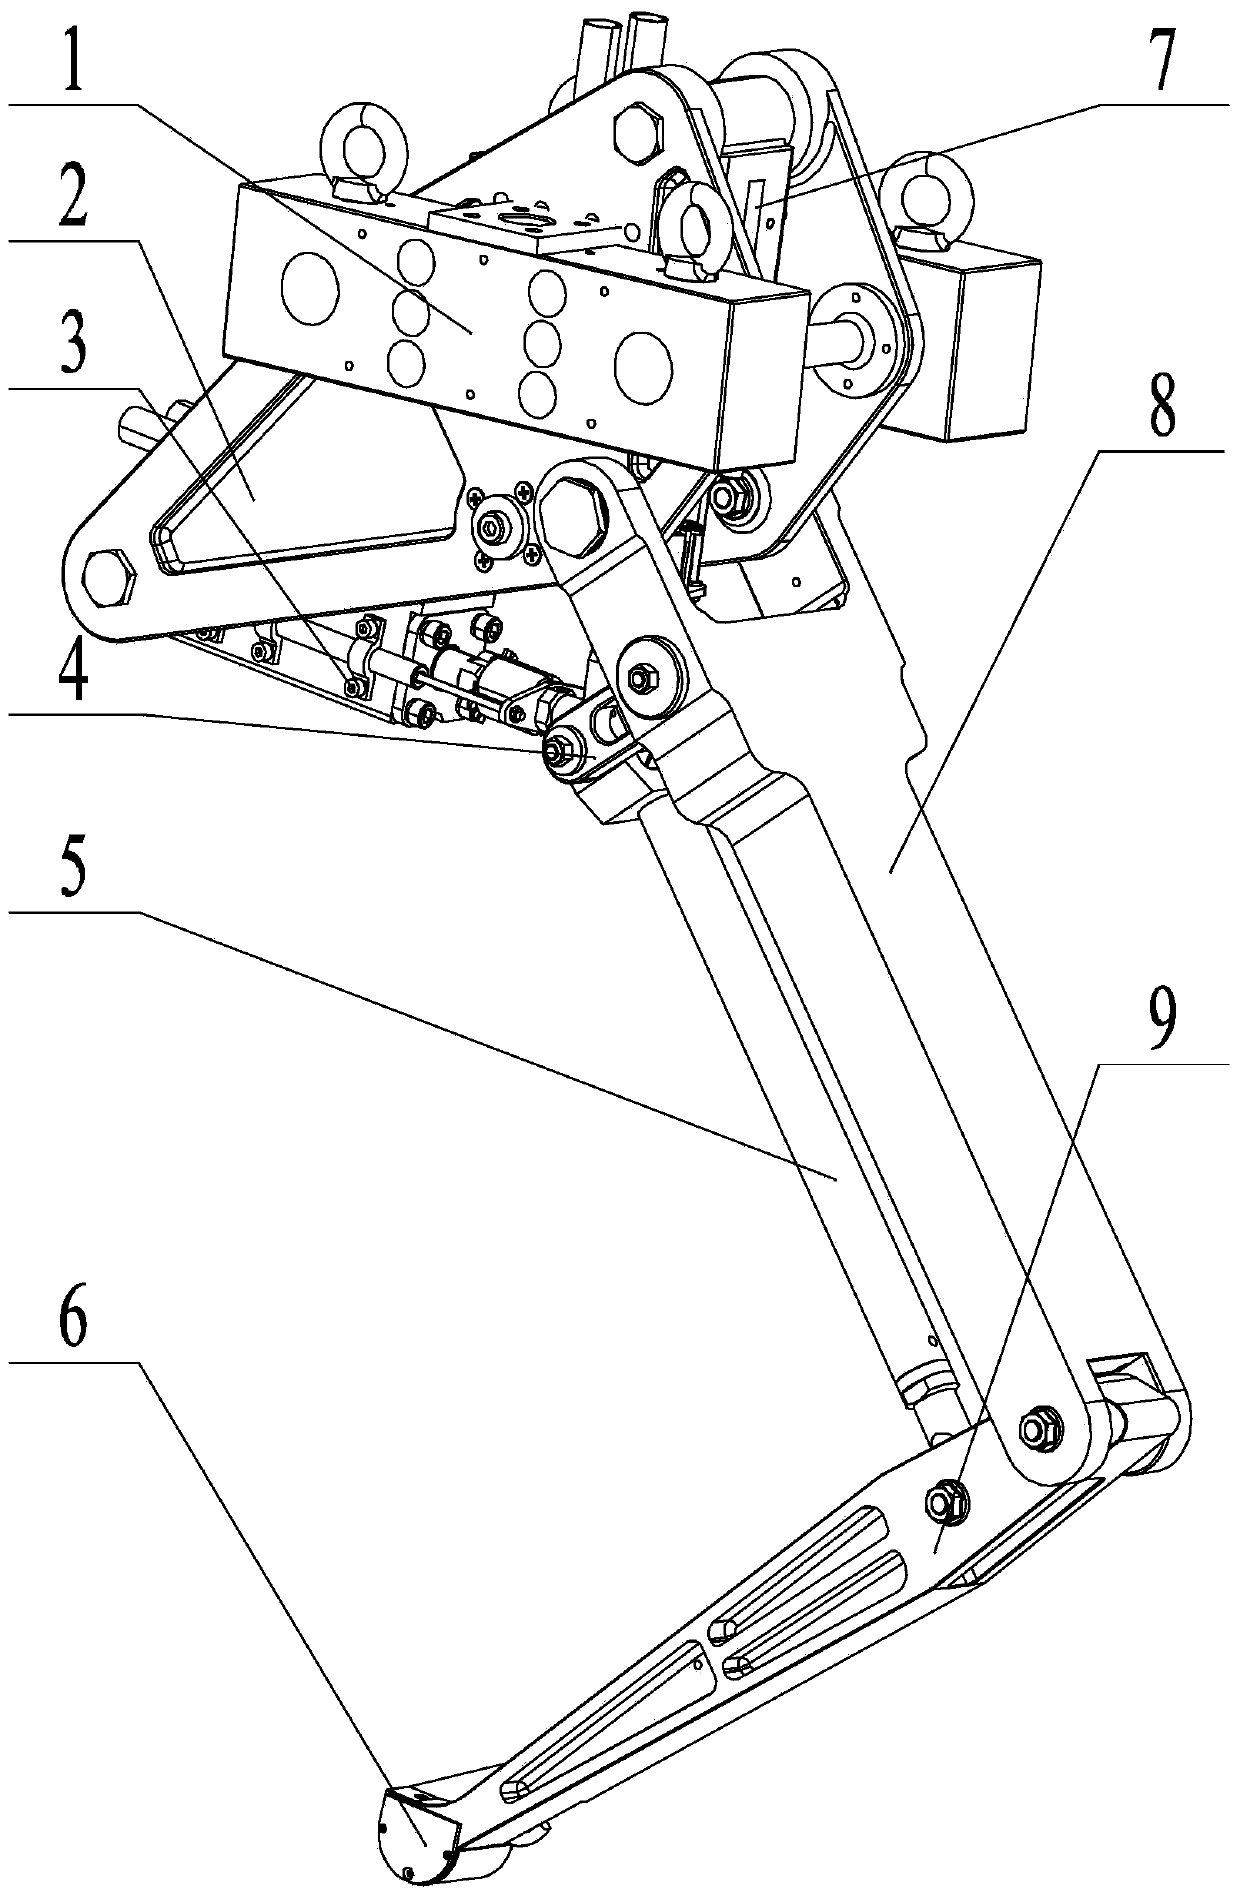 A parallel leg structure for high-speed running legged robot